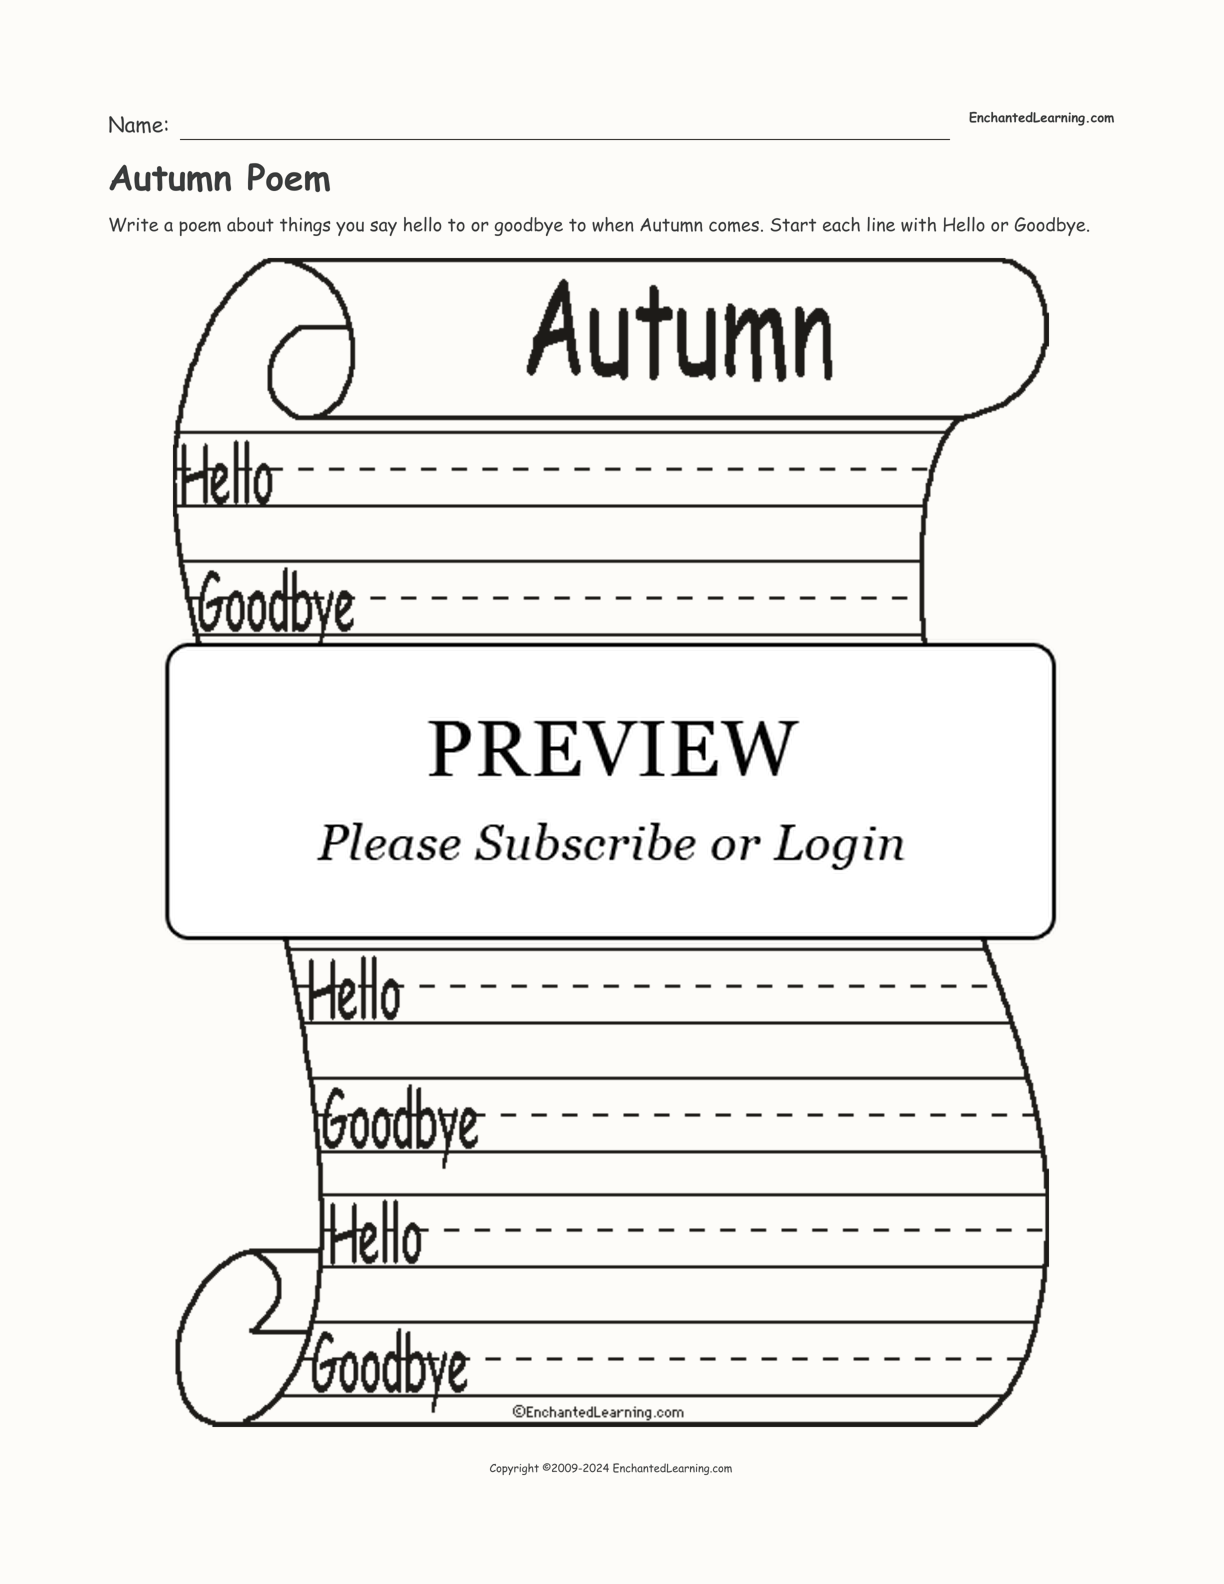 Autumn Poem interactive worksheet page 1